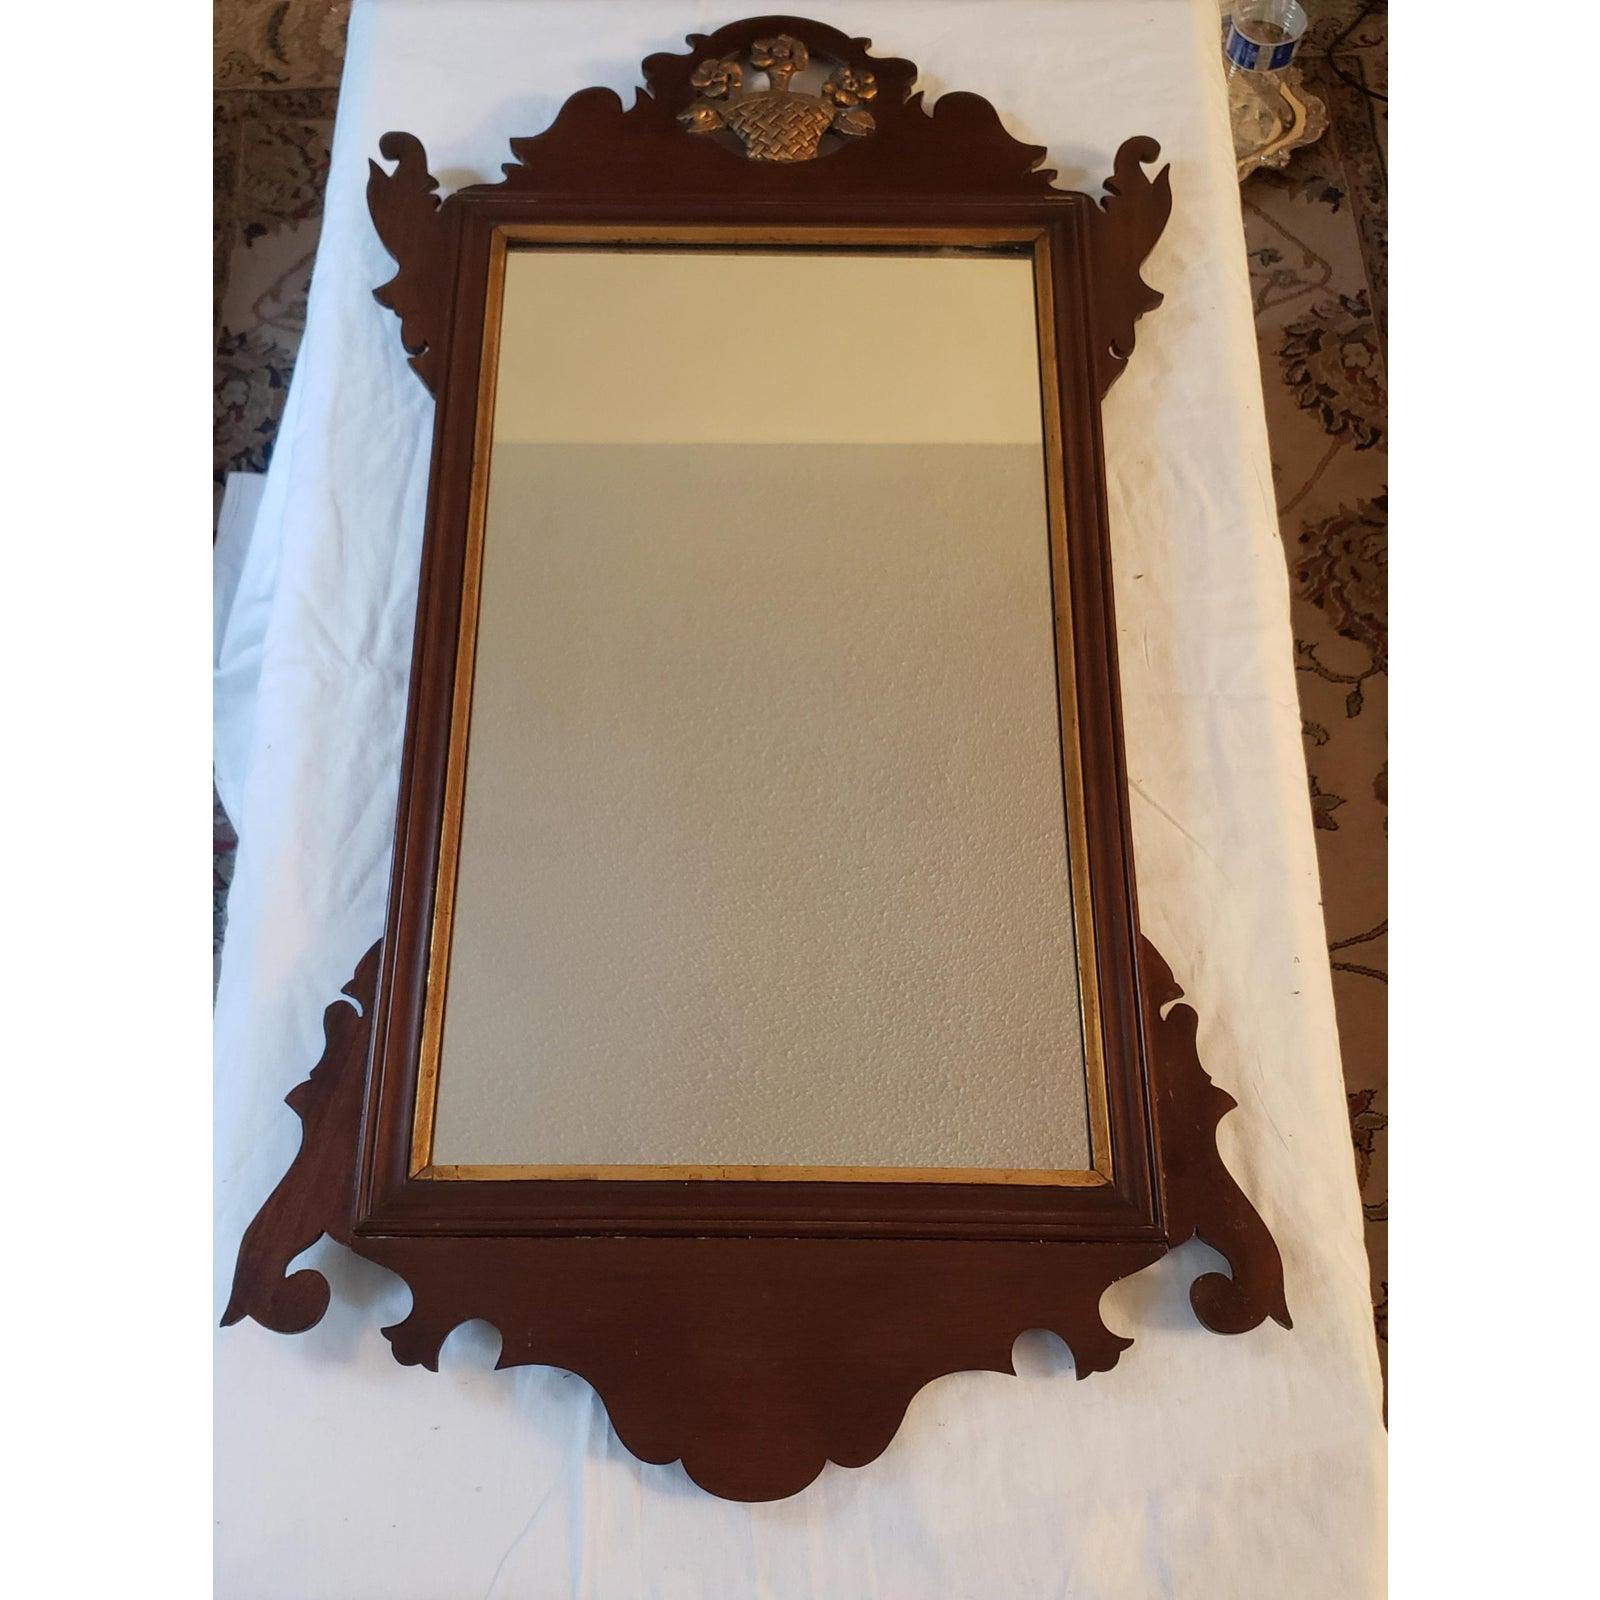 Rare 1790S Chippendale mirror.
Measures: 20W x 1D x 37H.